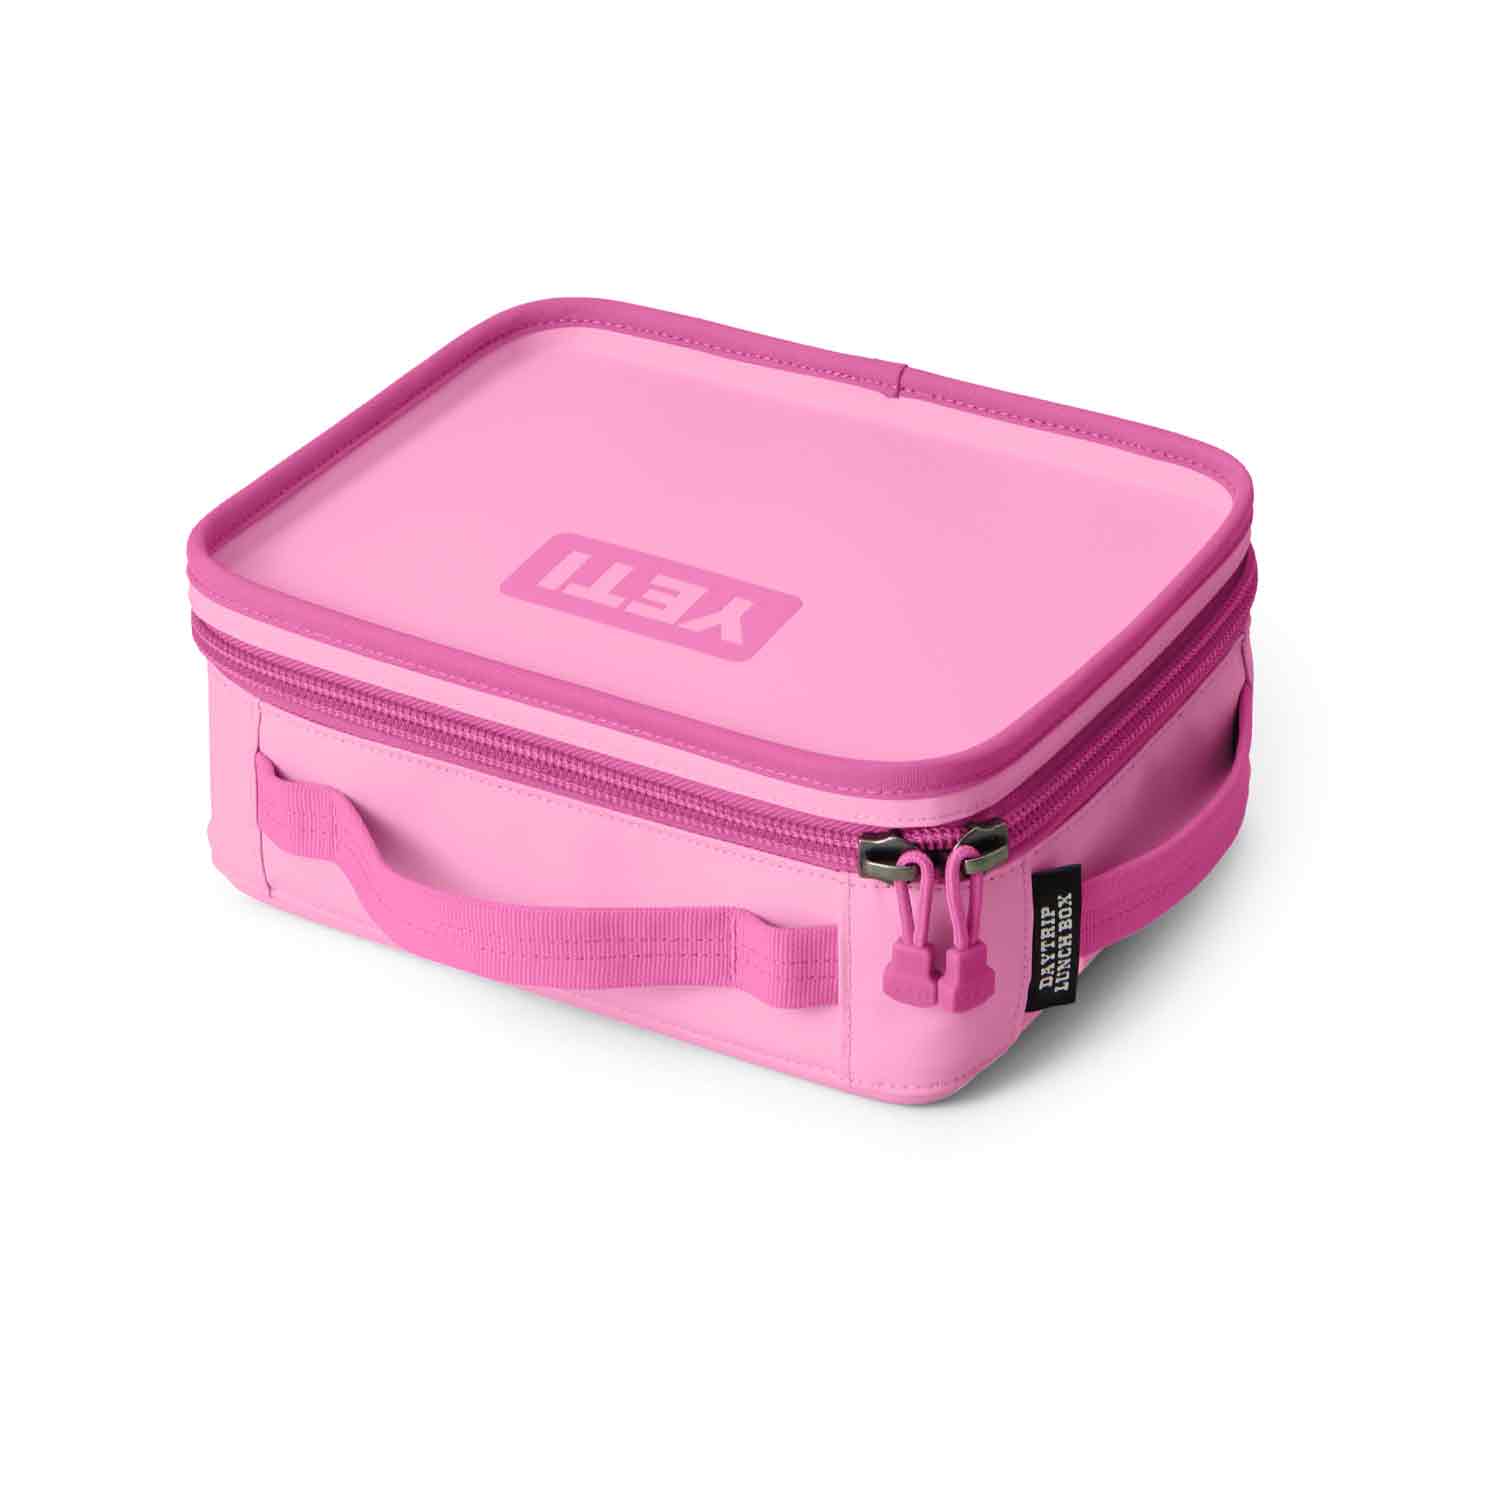 Yeti Daytrip Lunch Box Power Pink – Lancaster Archery Supply